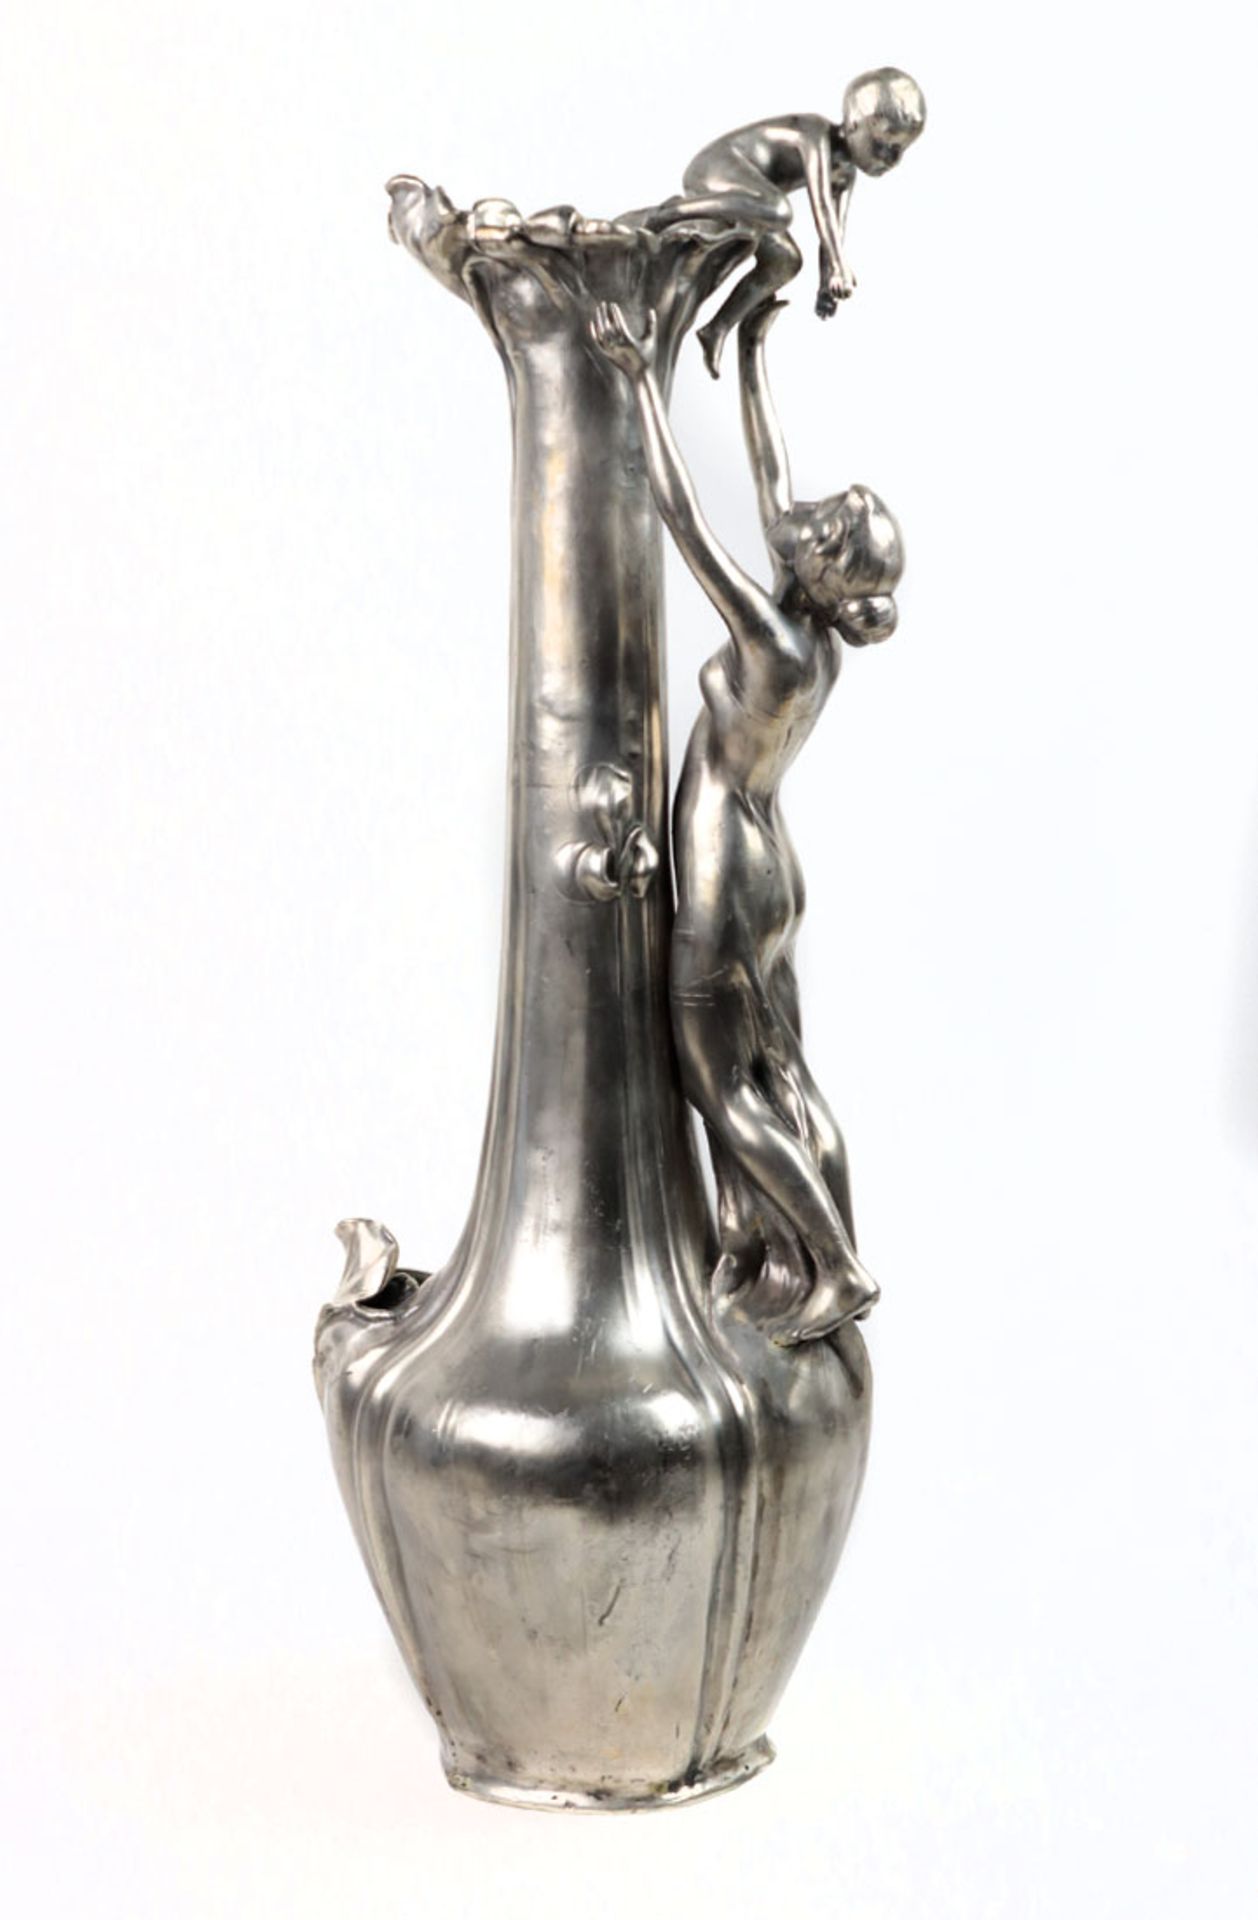 WMF Jugendstil Vase um 1900Metall versilbert, Straußenmarke ab 1890 sowie *i/o*, *B* u. *OX*,